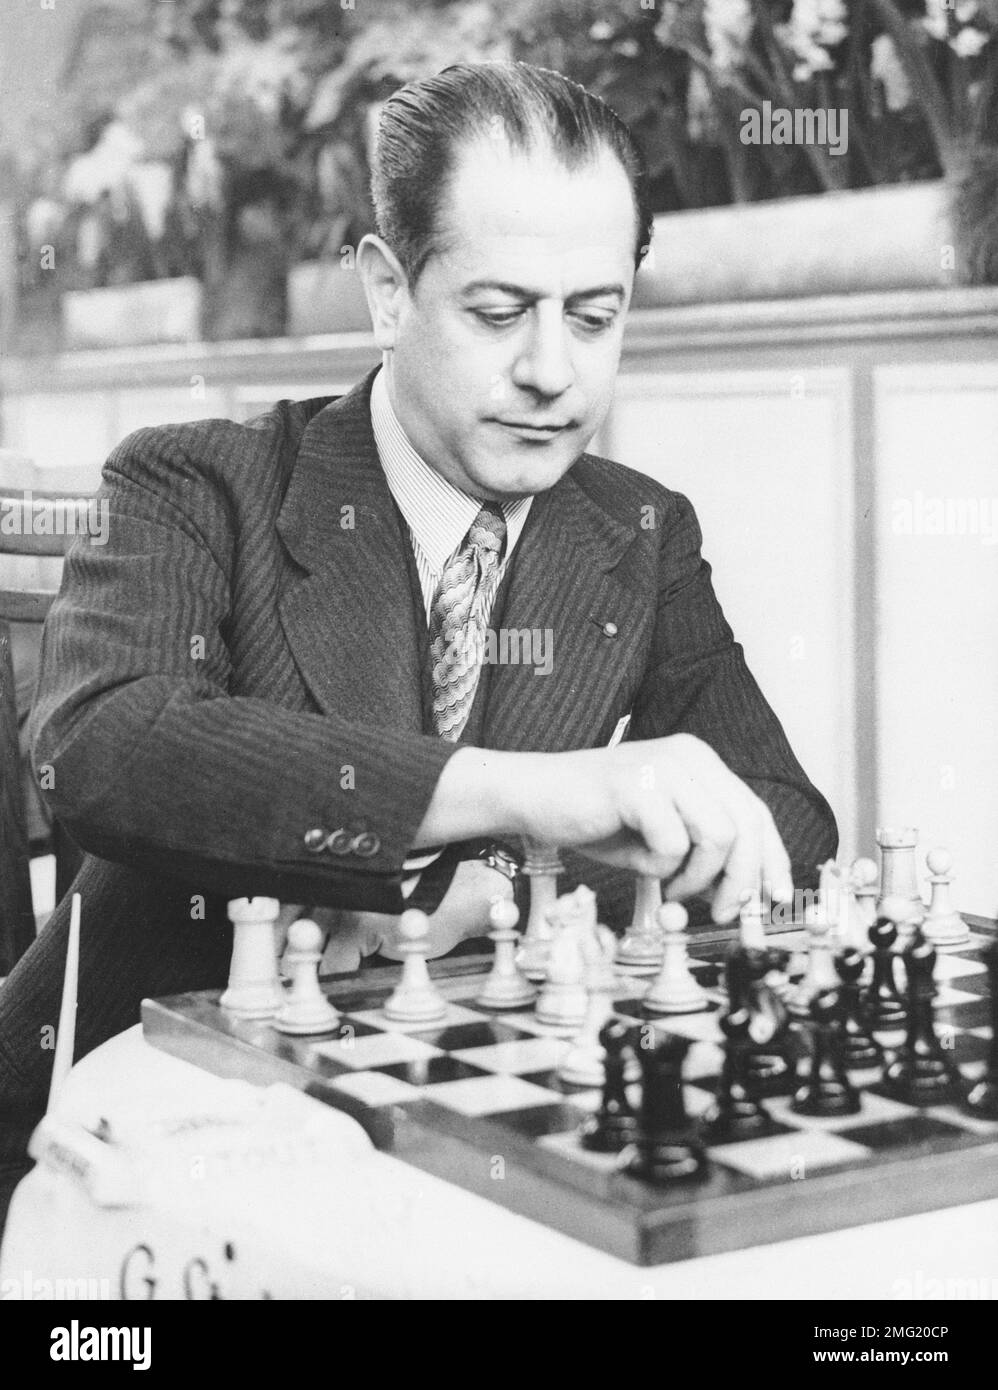 José Raúl Capablanca: Most instructive chess games 1919-1928 